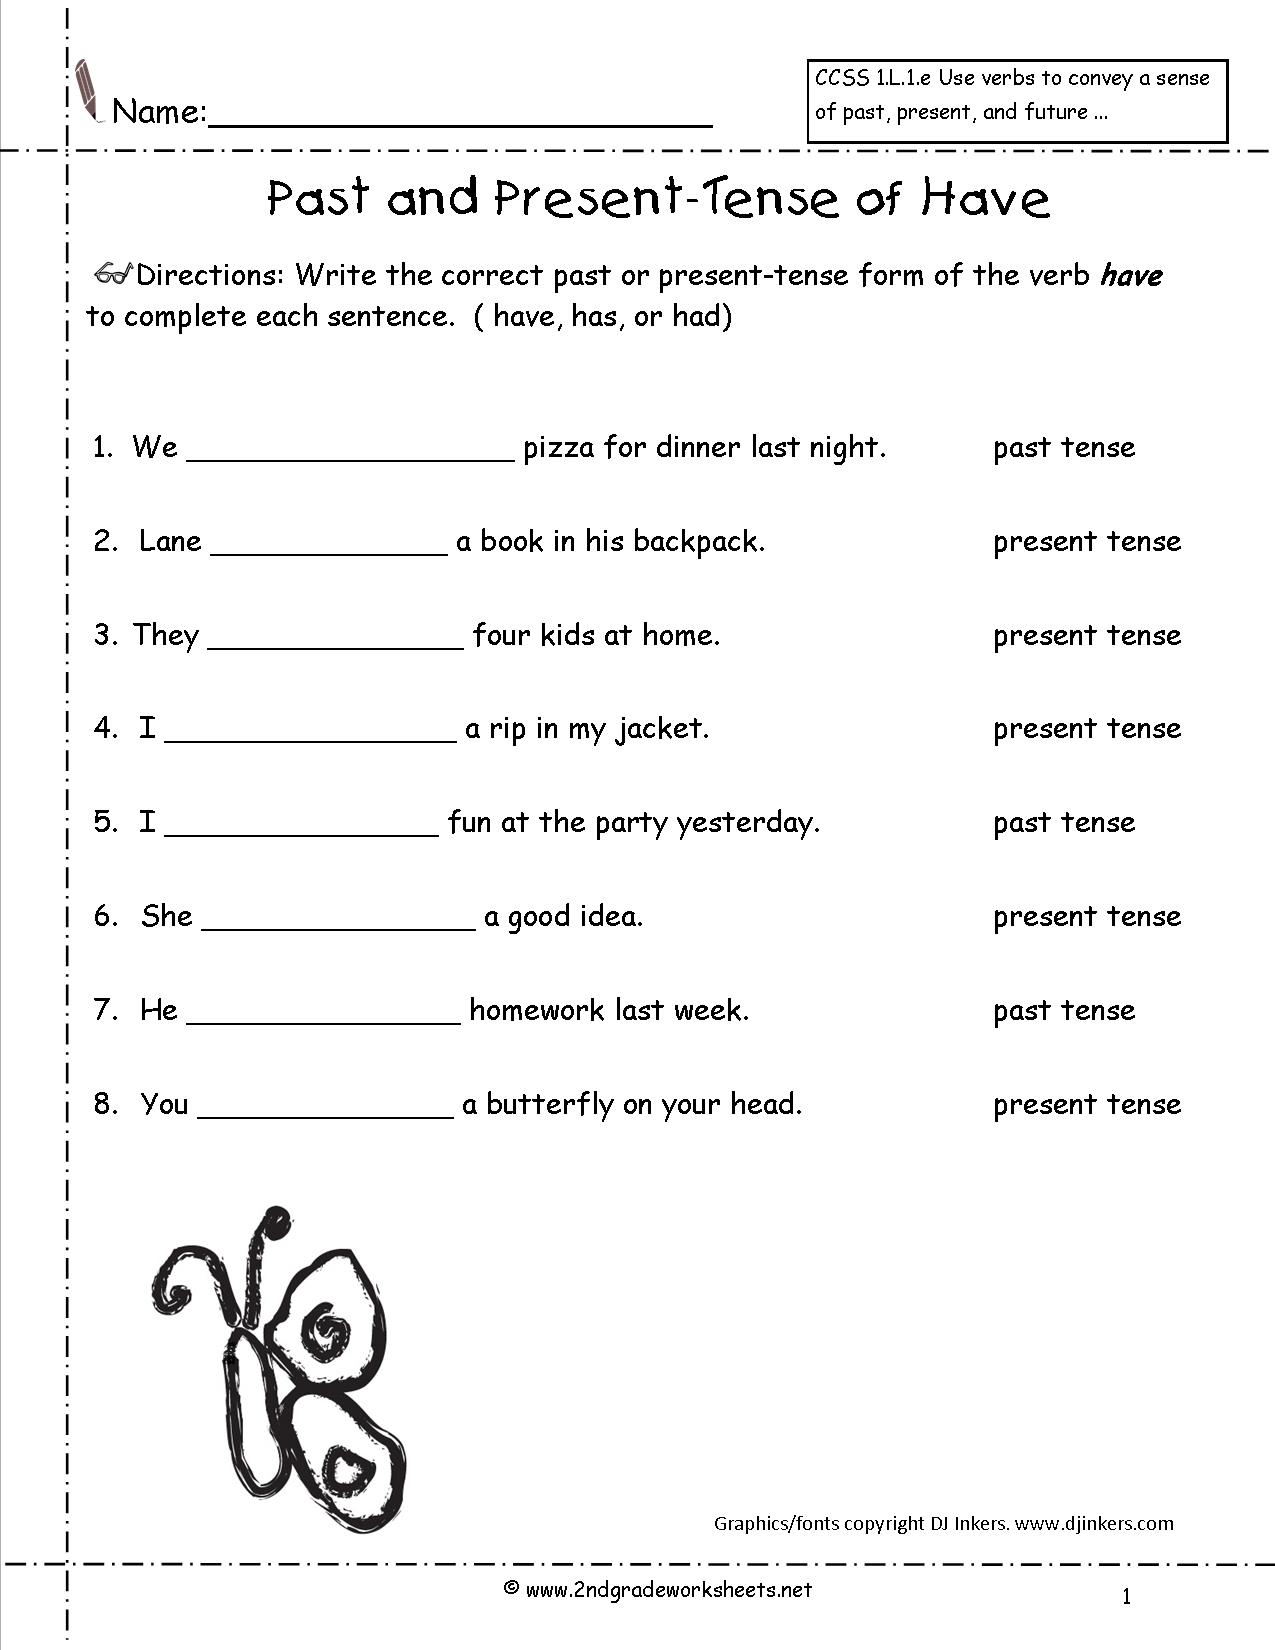 past-present-and-future-tense-verbs-worksheets-gram-tica-del-free-printable-past-tense